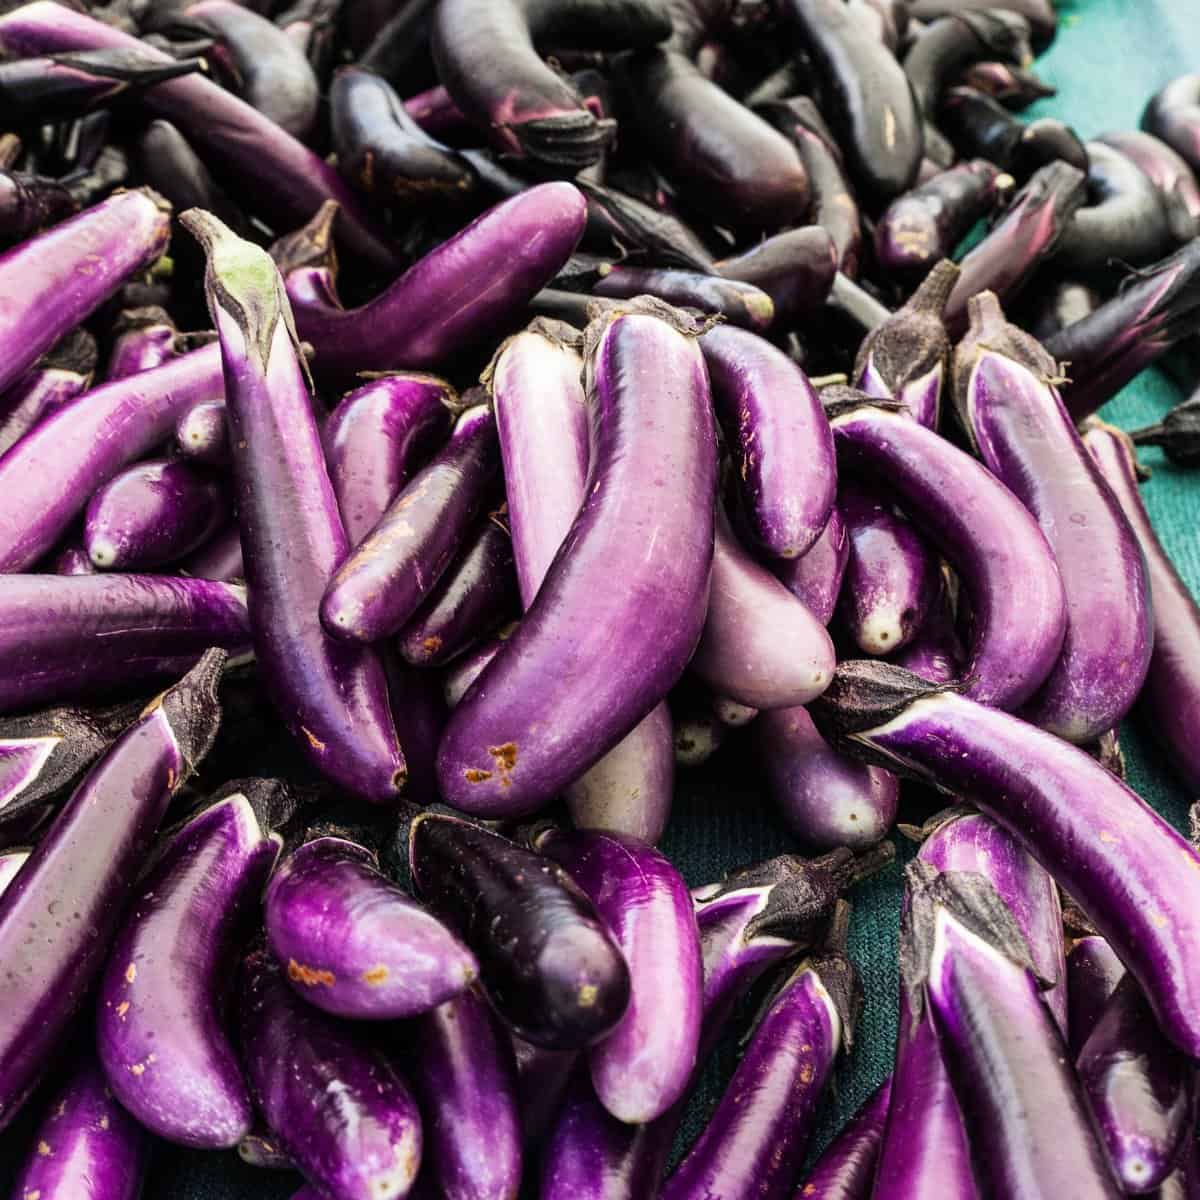 What are eggplants